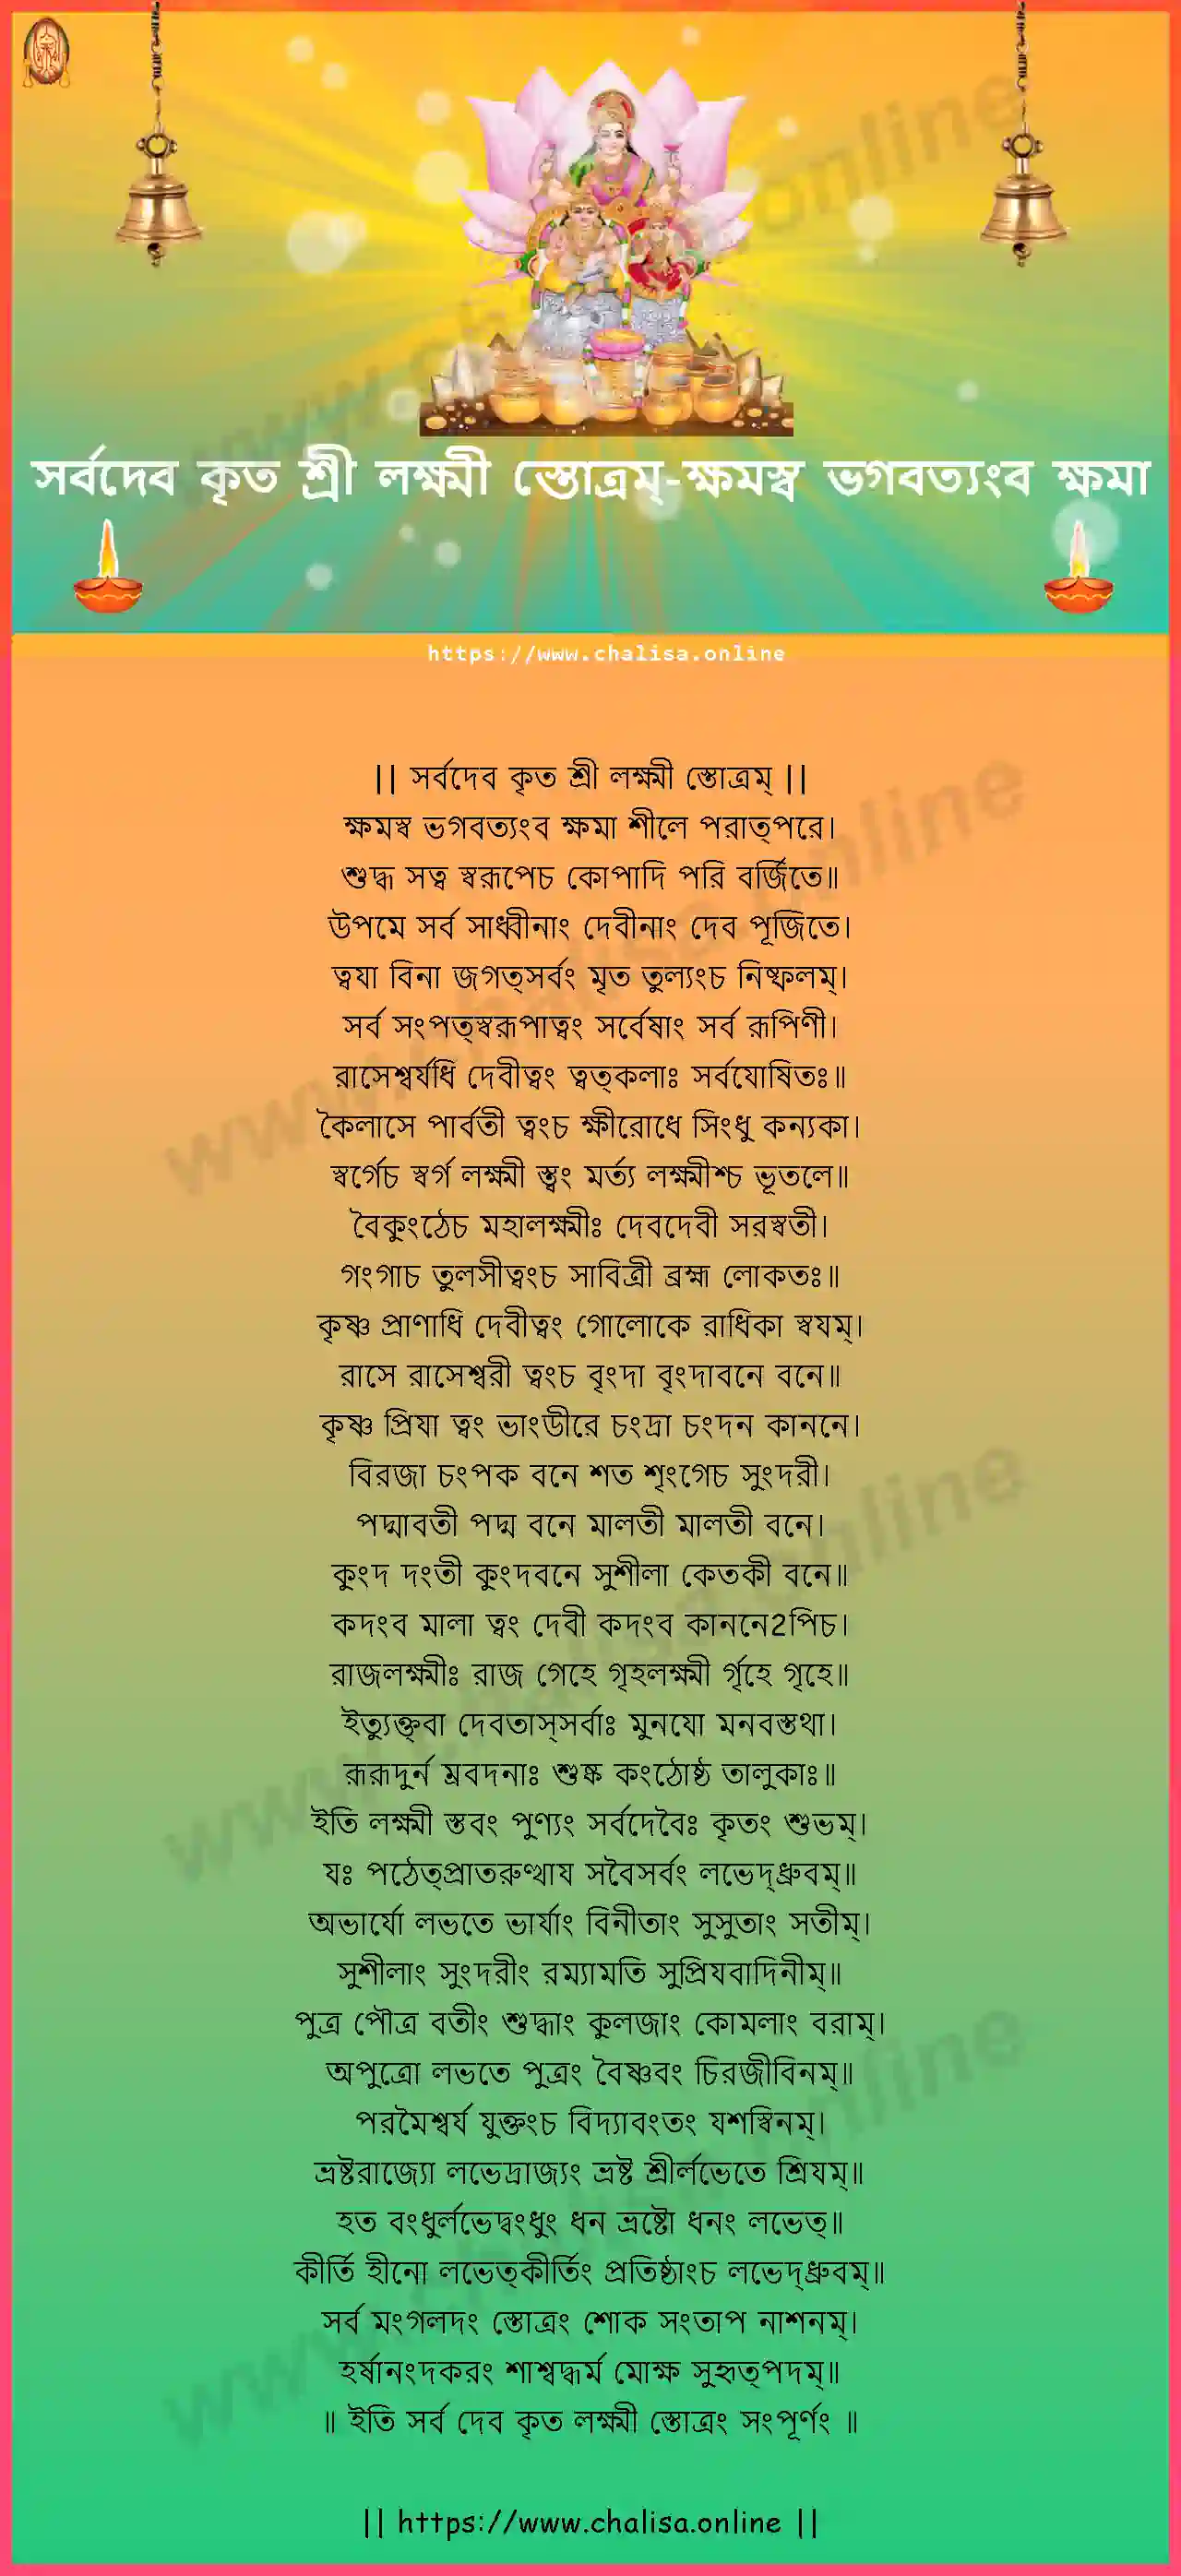 ksamasva-bhagavatyamba-sarvadeva-kruta-sri-lakshmi-stotram-bengali-bengali-lyrics-download